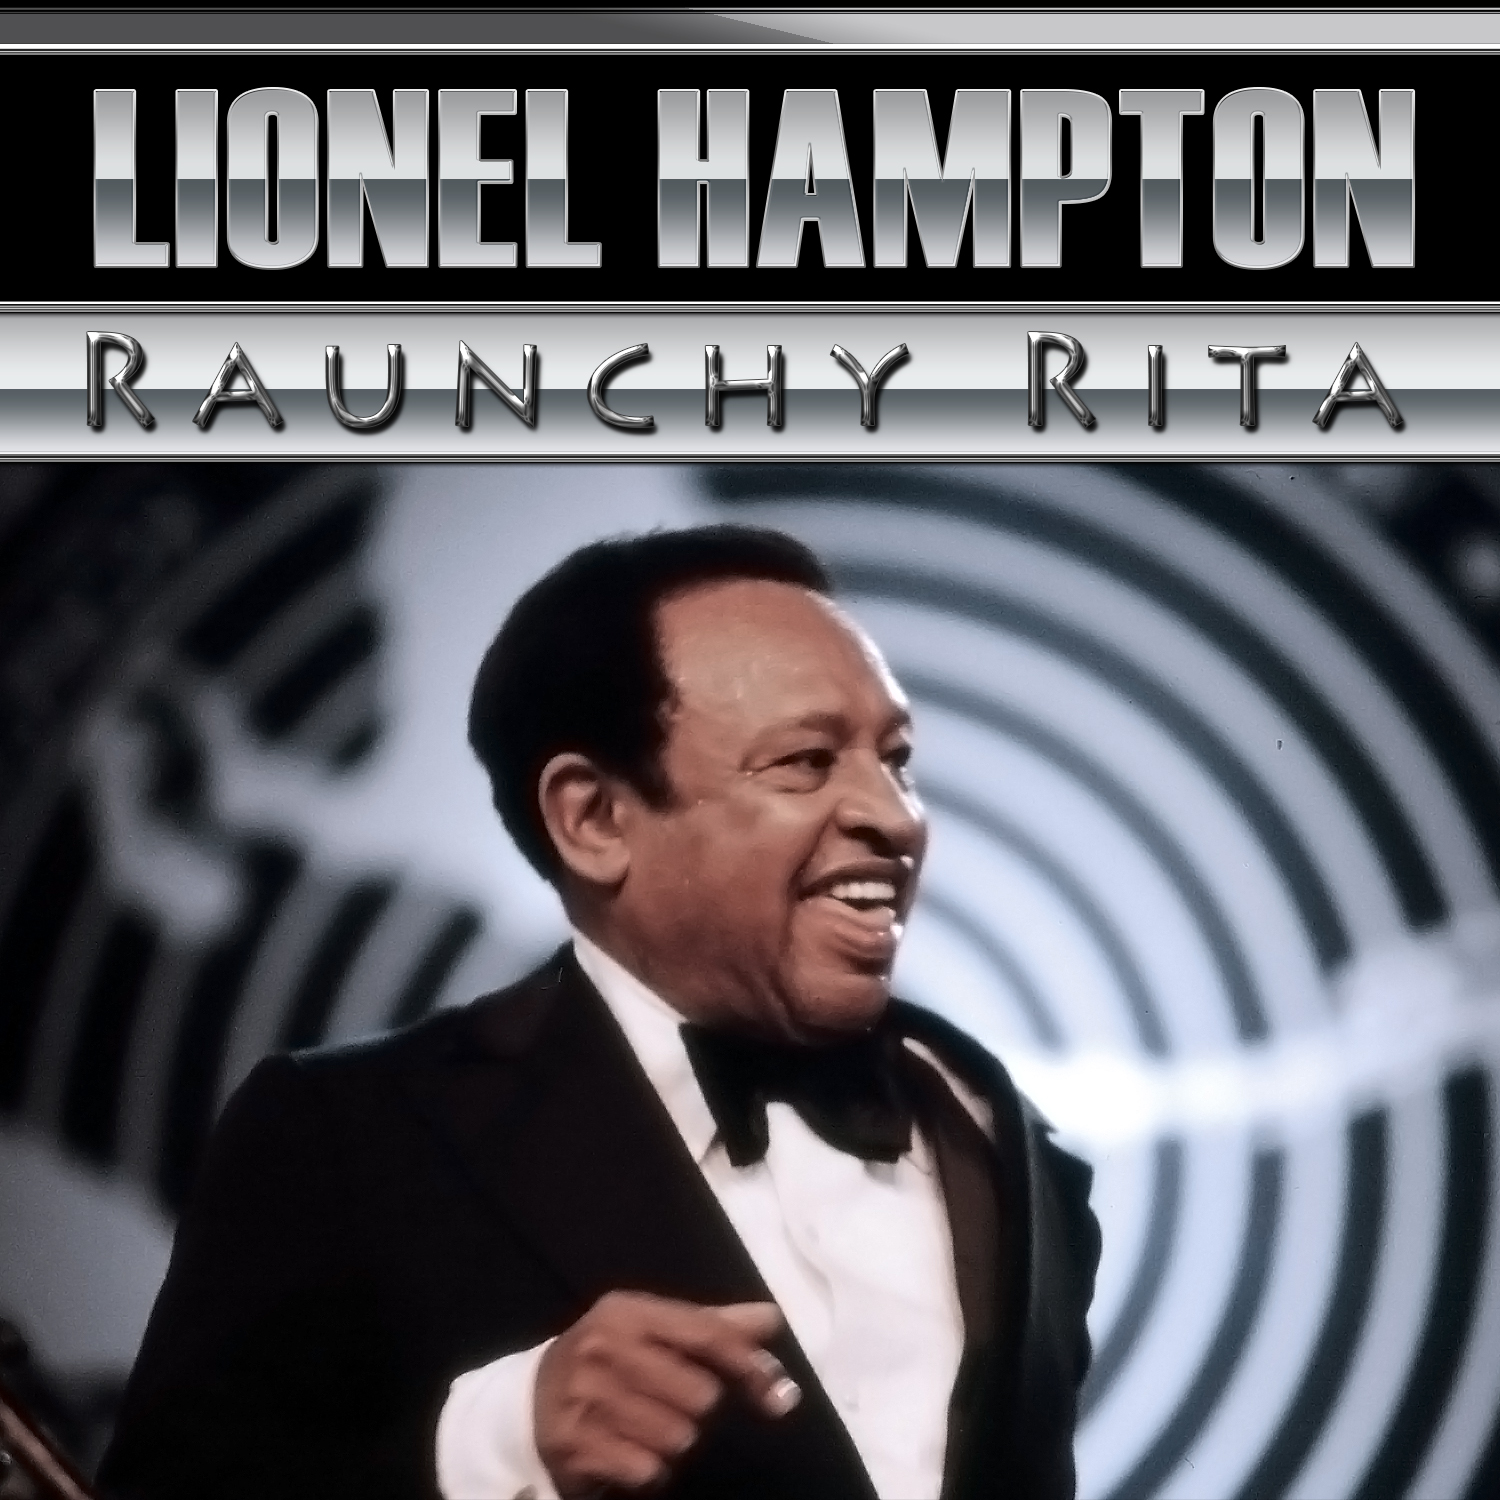 Raunchy Rita by Lionel Hampton